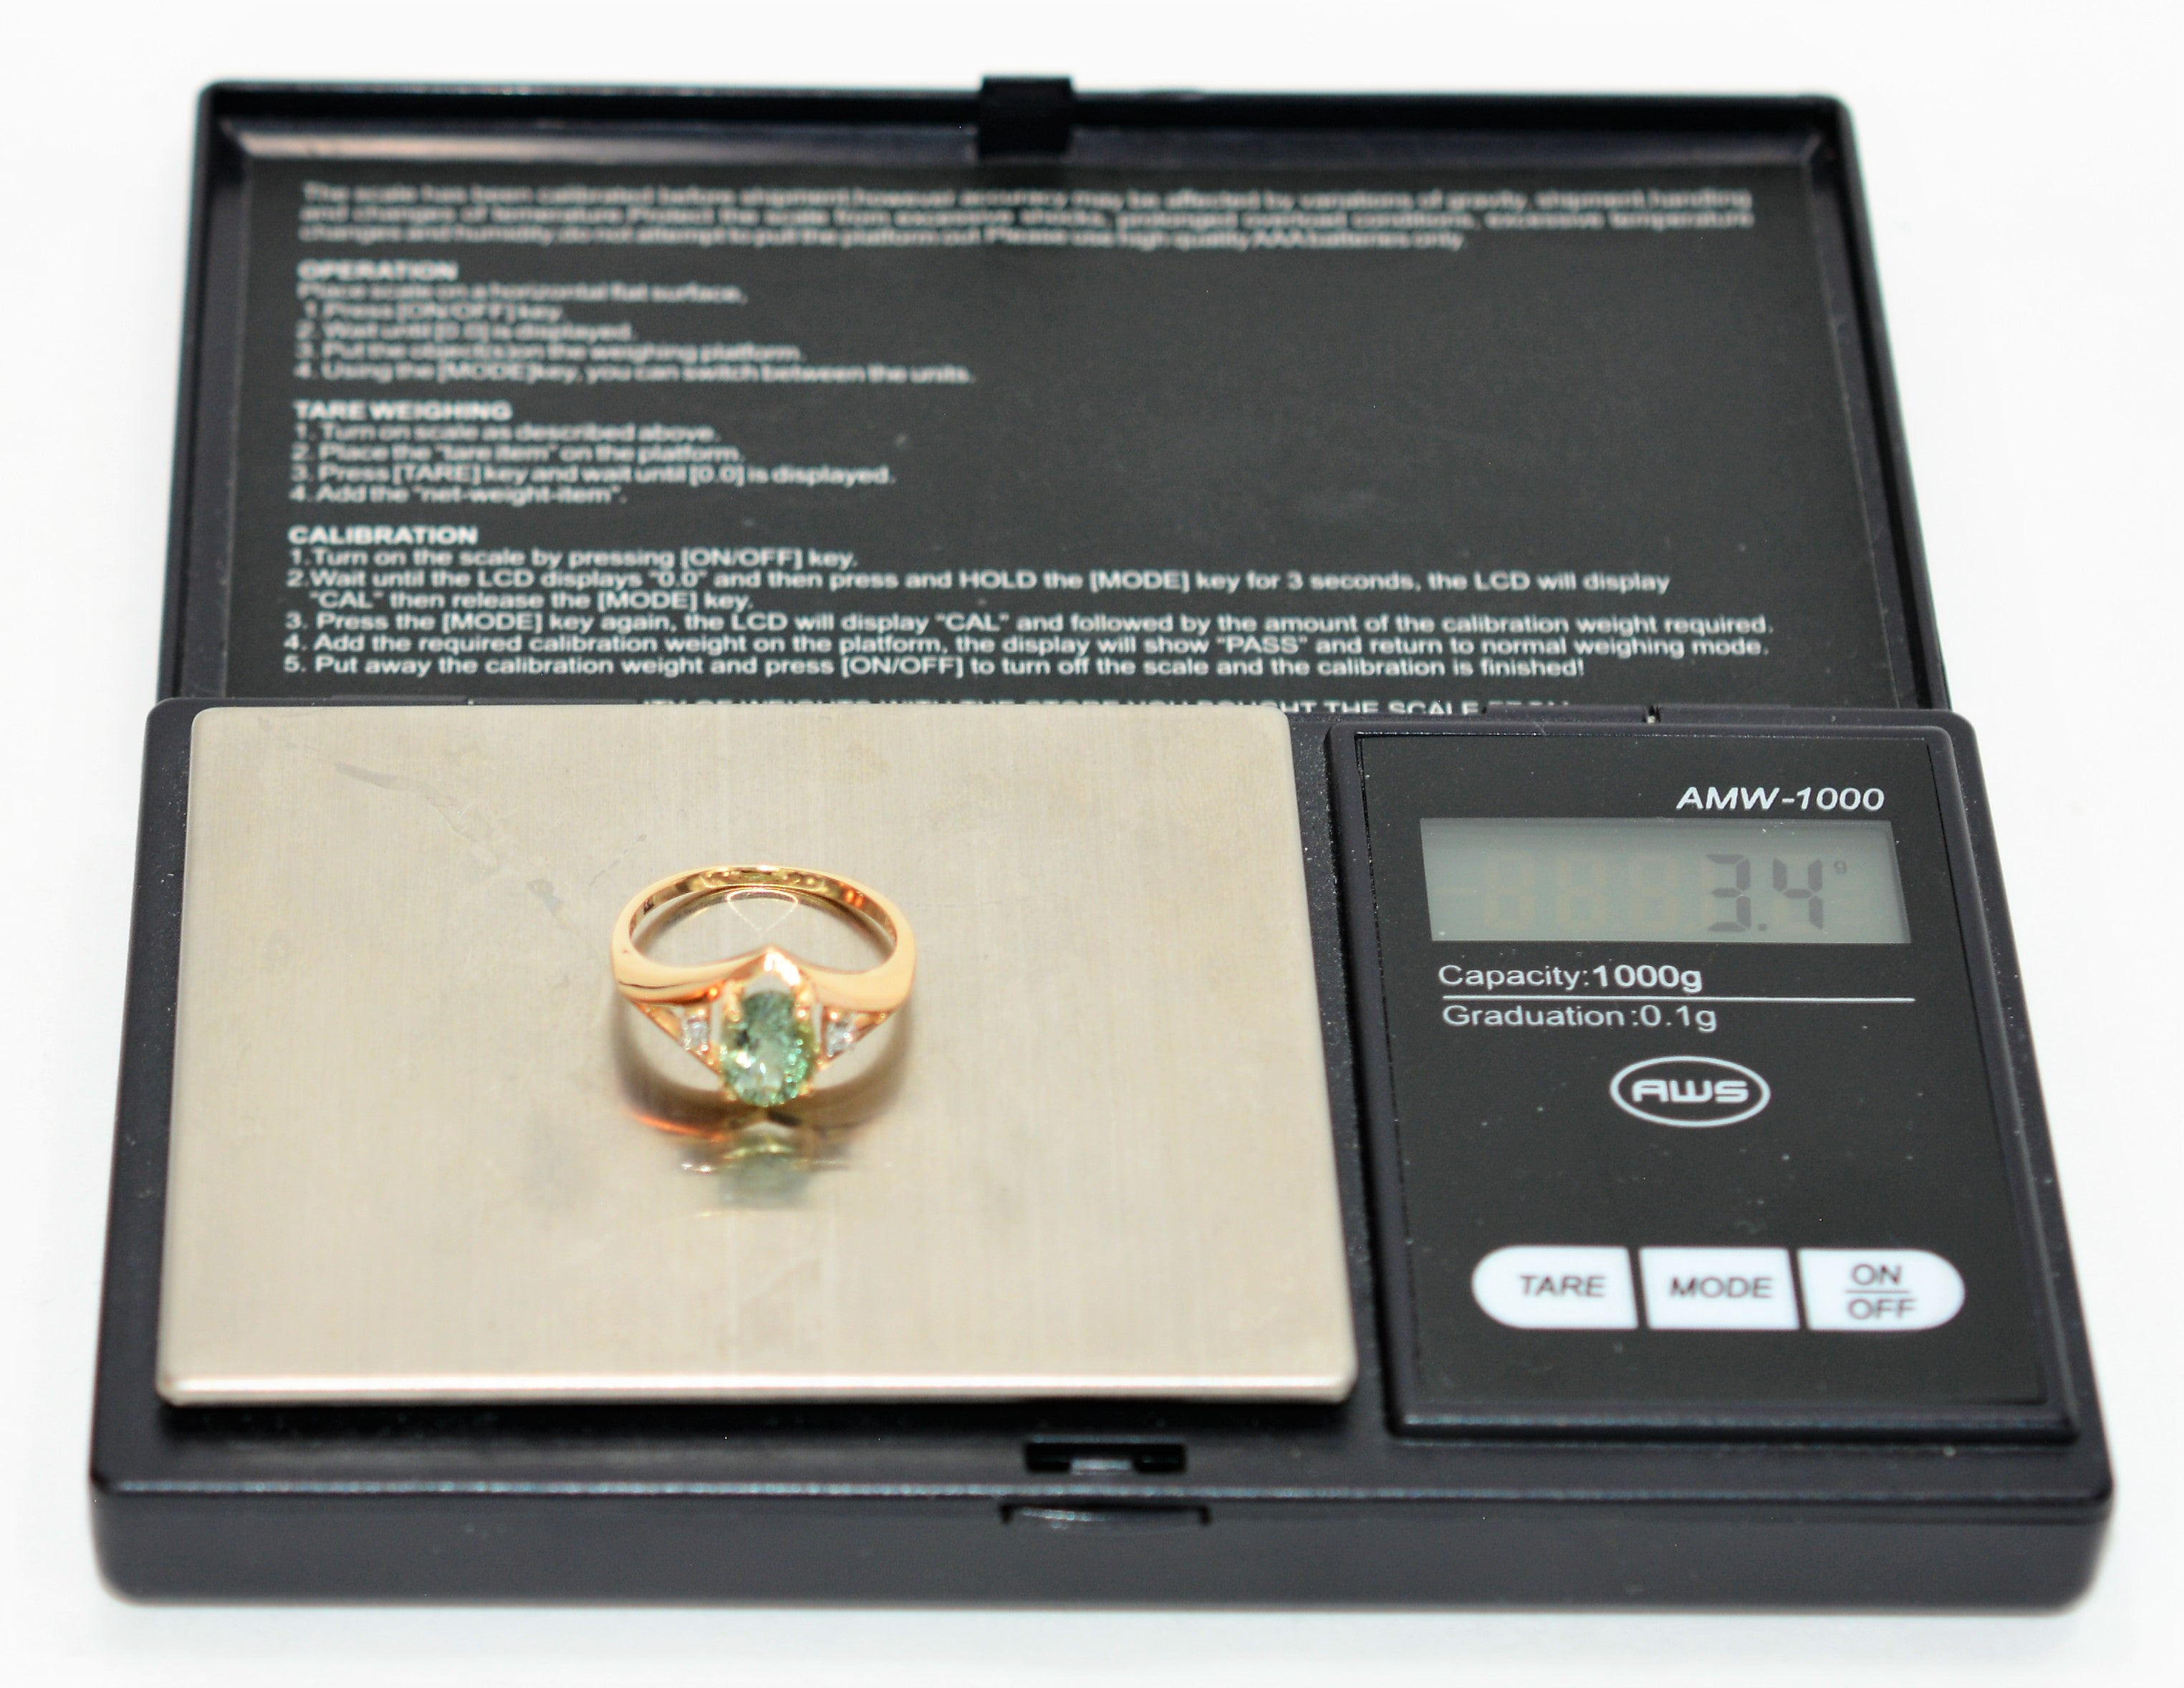 Natural Paraiba Tourmaline & Diamond Ring 14K Solid Gold 1.96tcw Rare Gemstone Jewelry Estate Ring Birthstone Ring Women's Ring Jewellery